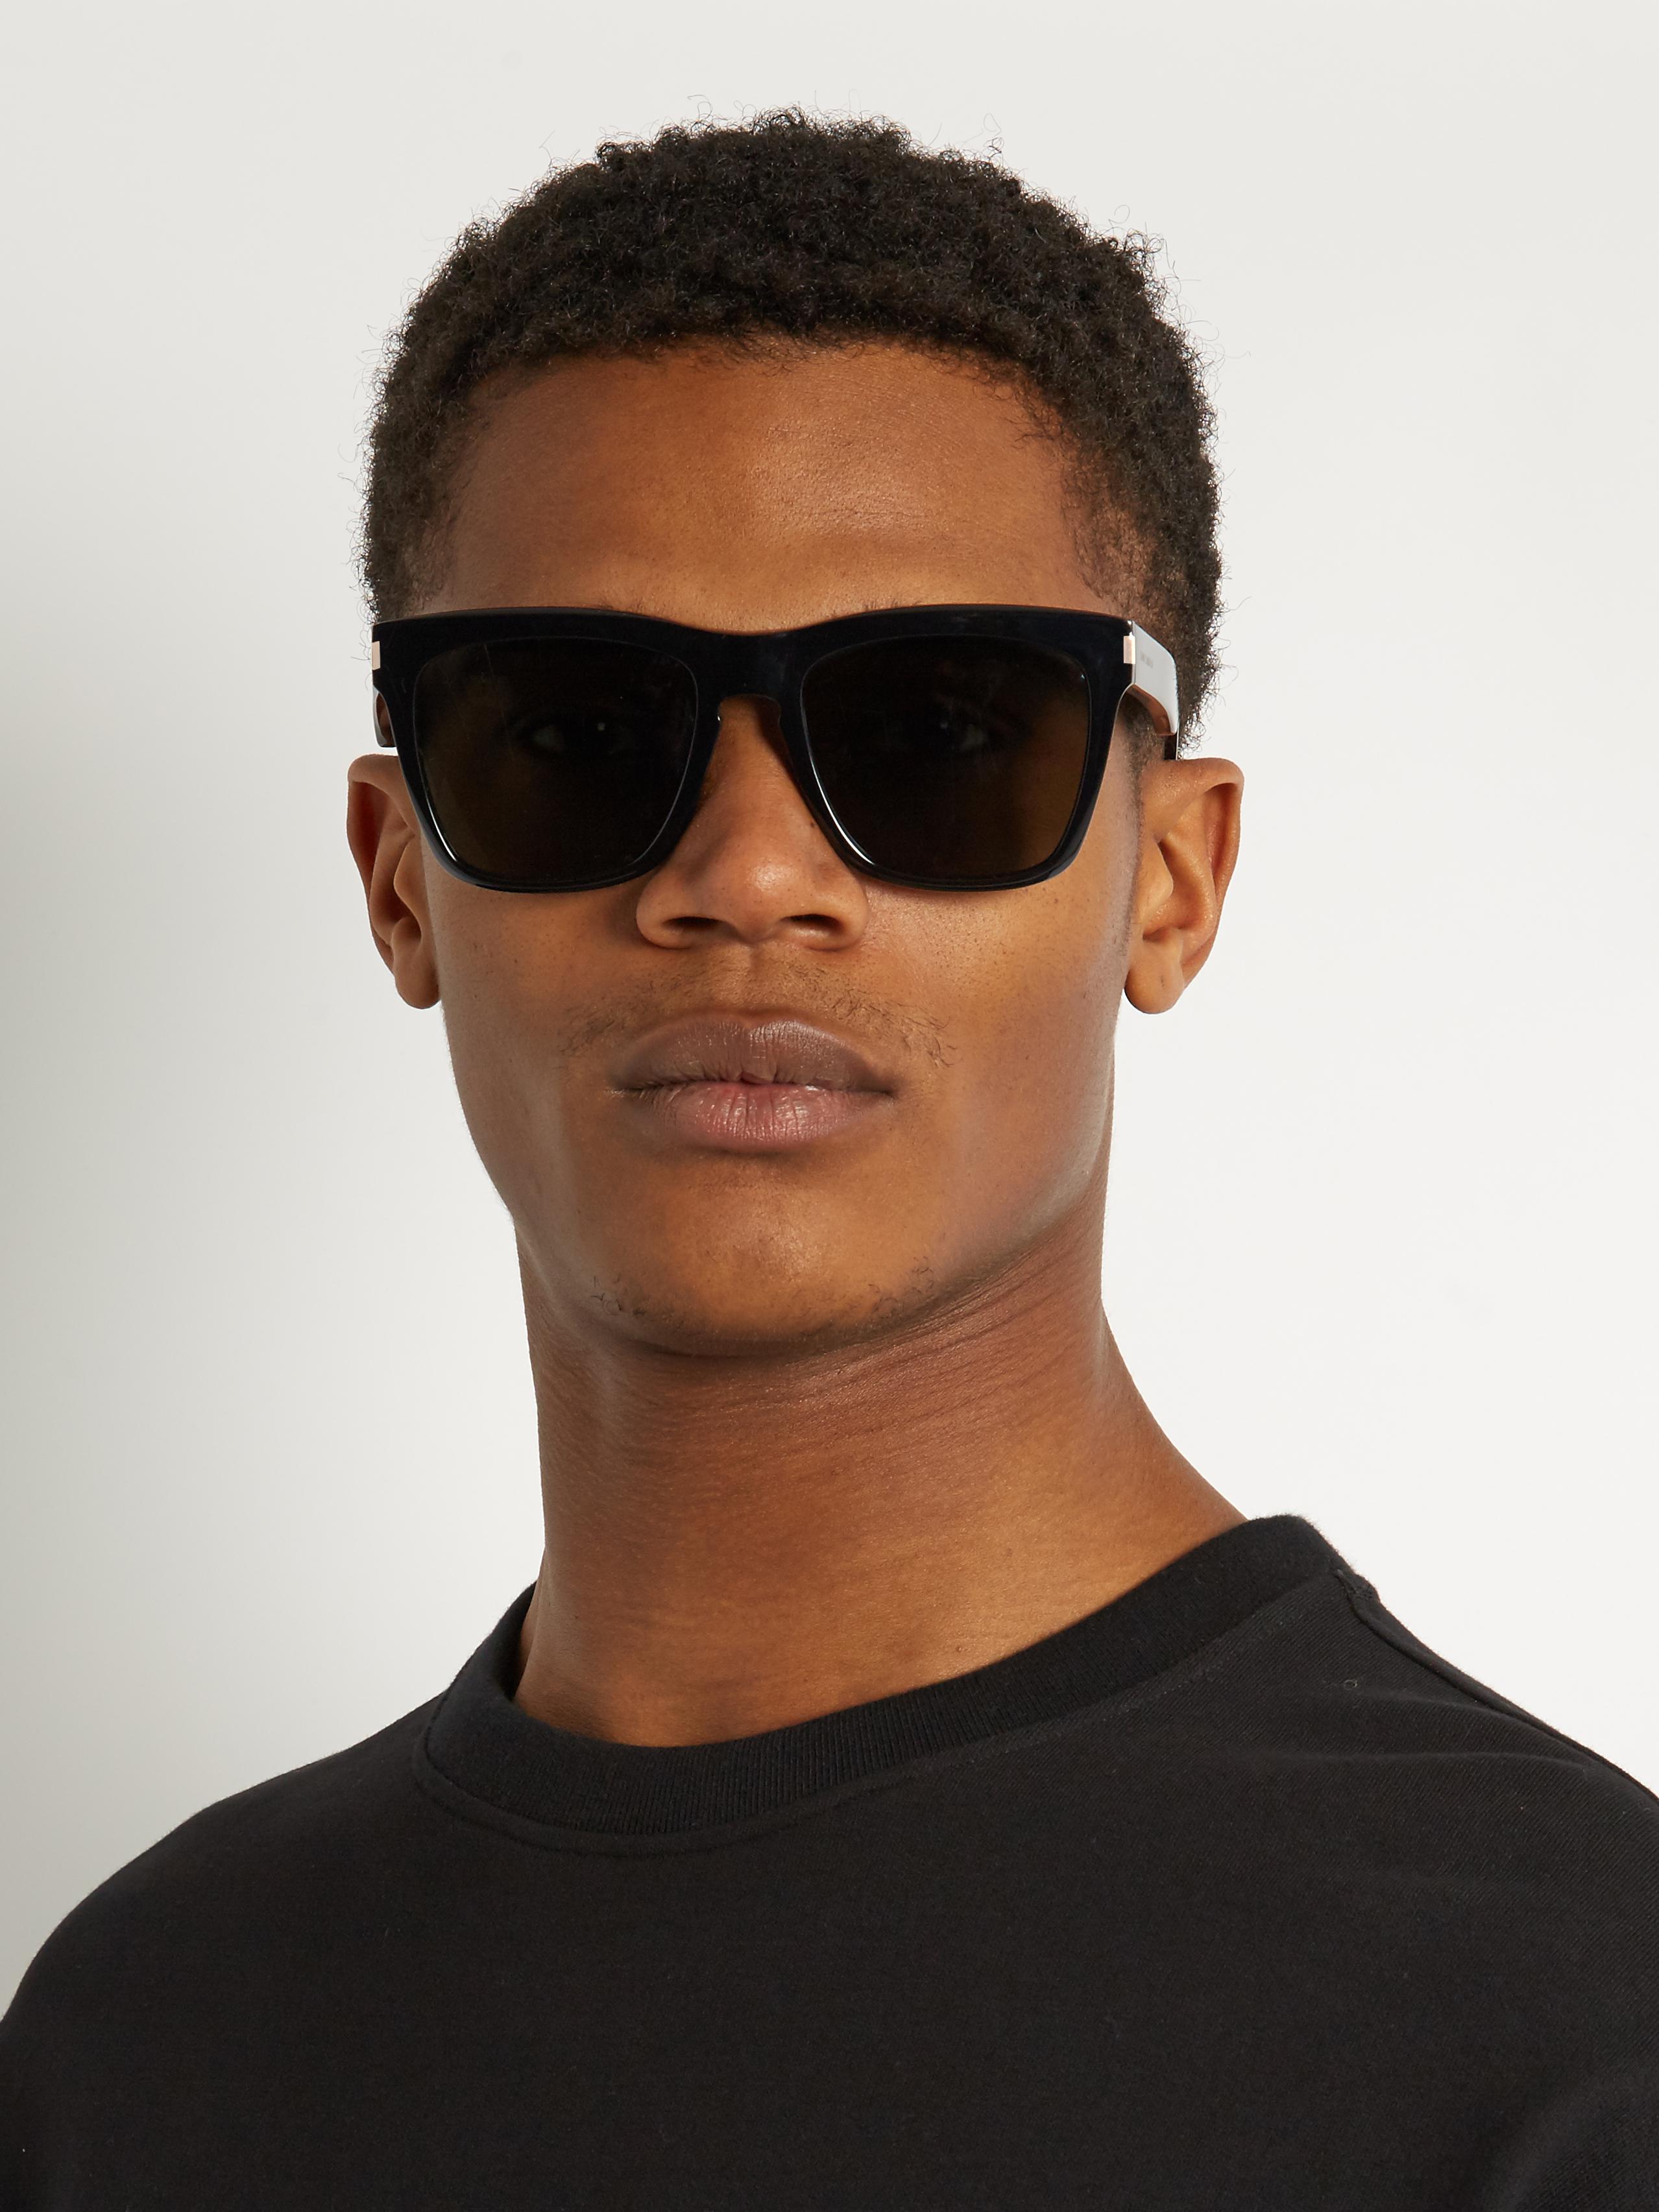 Get the Best Deals Outlet Shopping Saint Laurentwomens Sunglasses